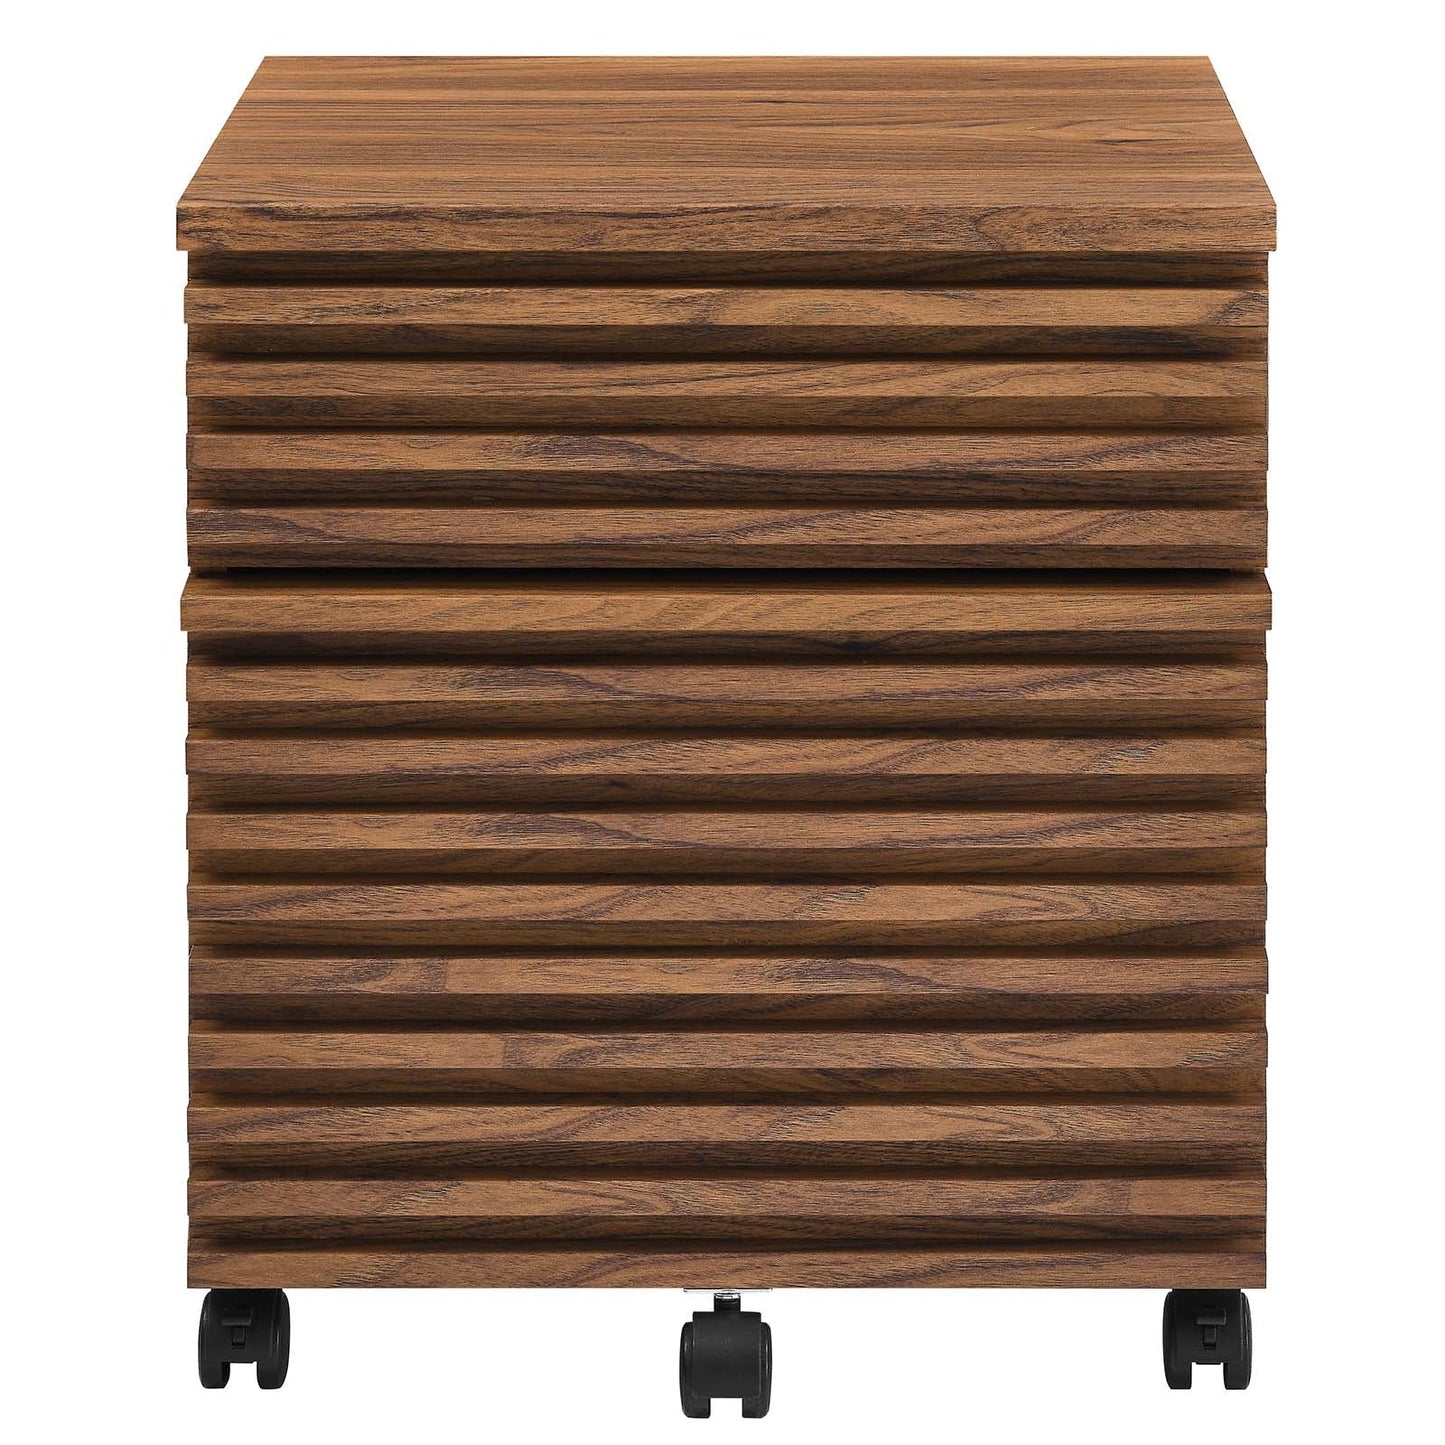 Grana Wood File Cabinet